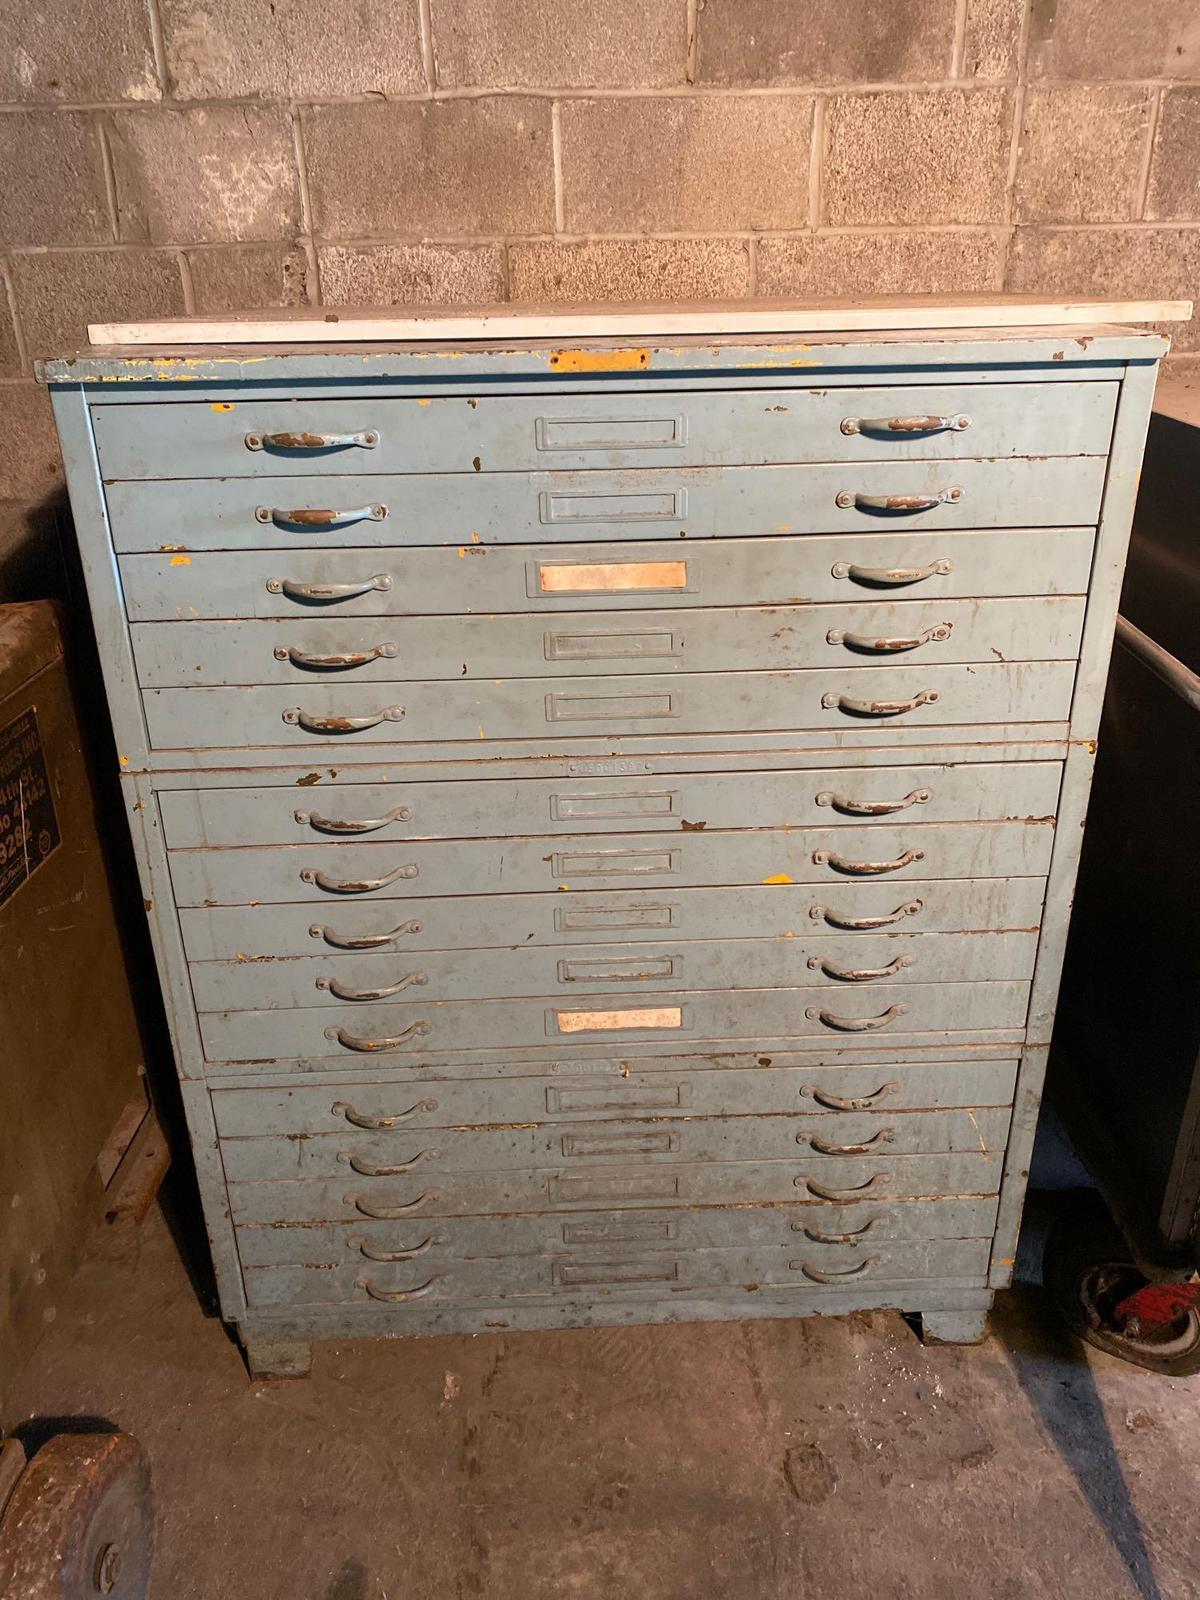 (3) 5 drawer steel blue print cabinets